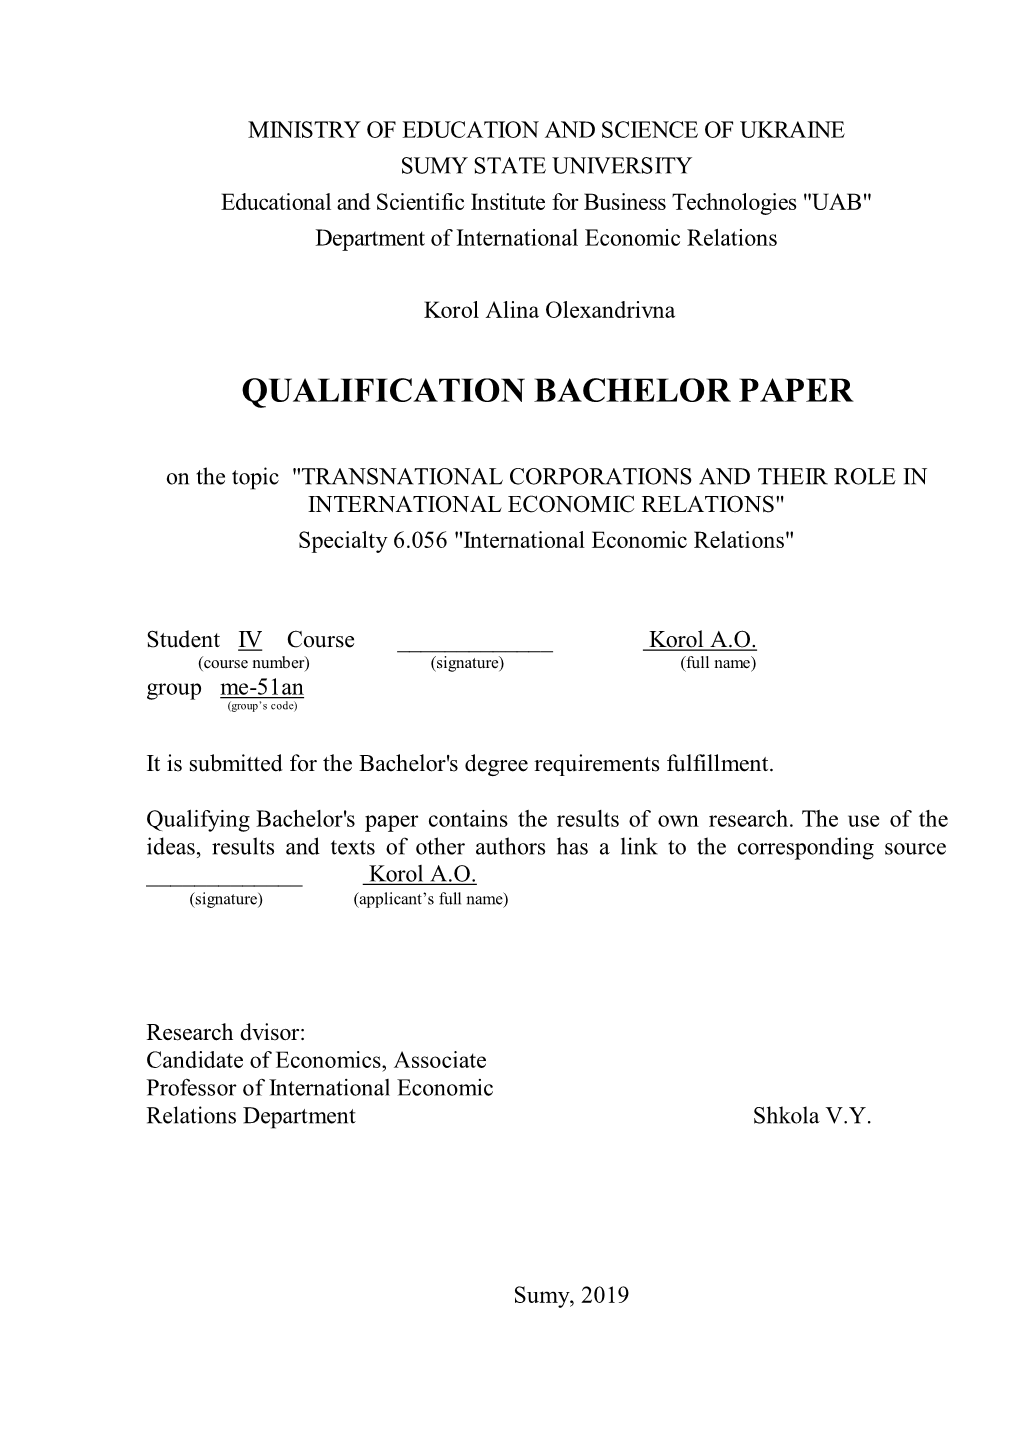 Qualification Bachelor Paper